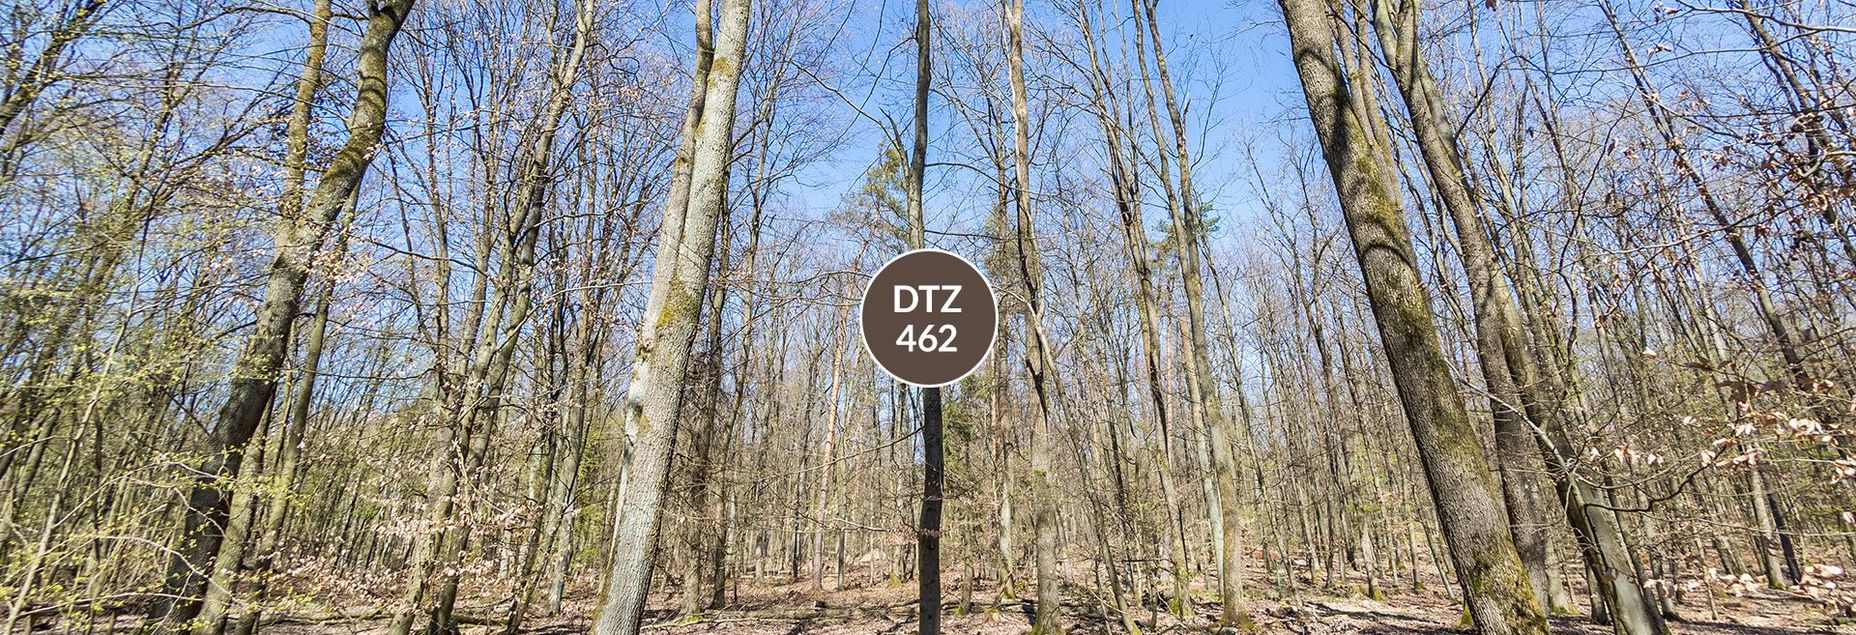 Baum DTZ 462 - Fisheyeperspektive